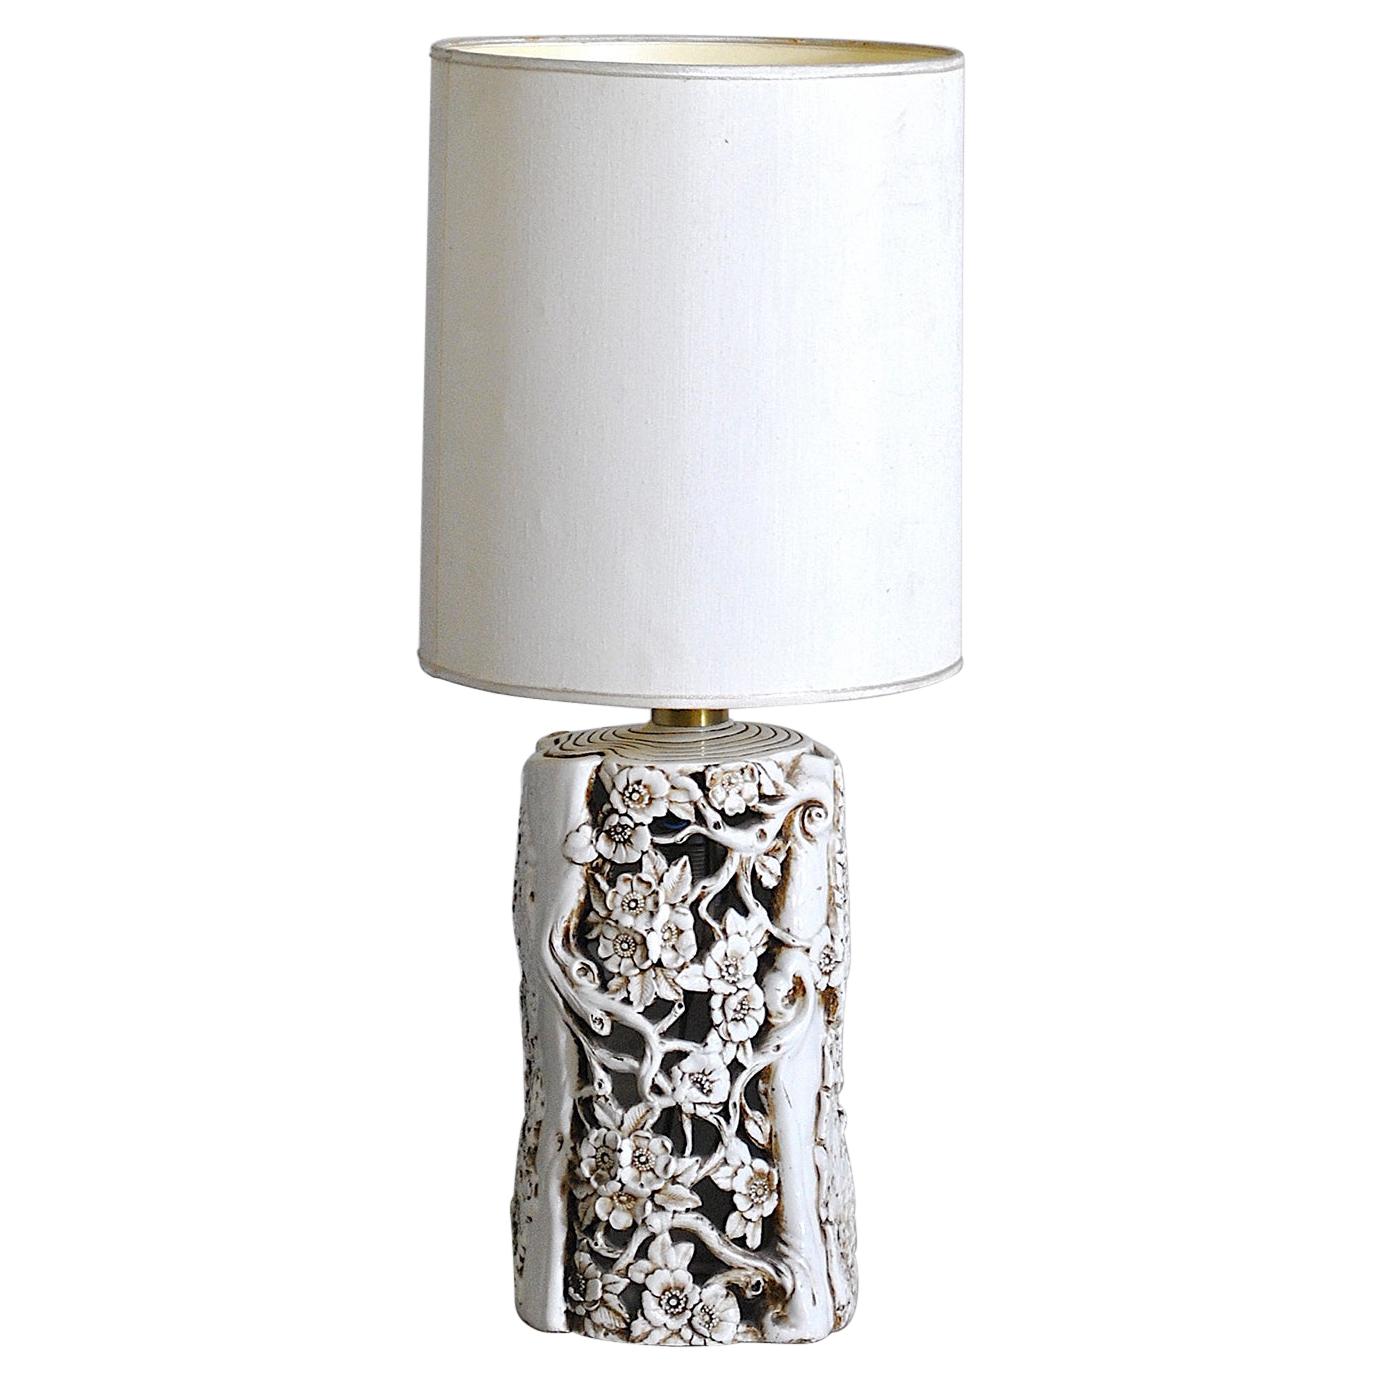 Italian Ceramic Table Lamp 60's